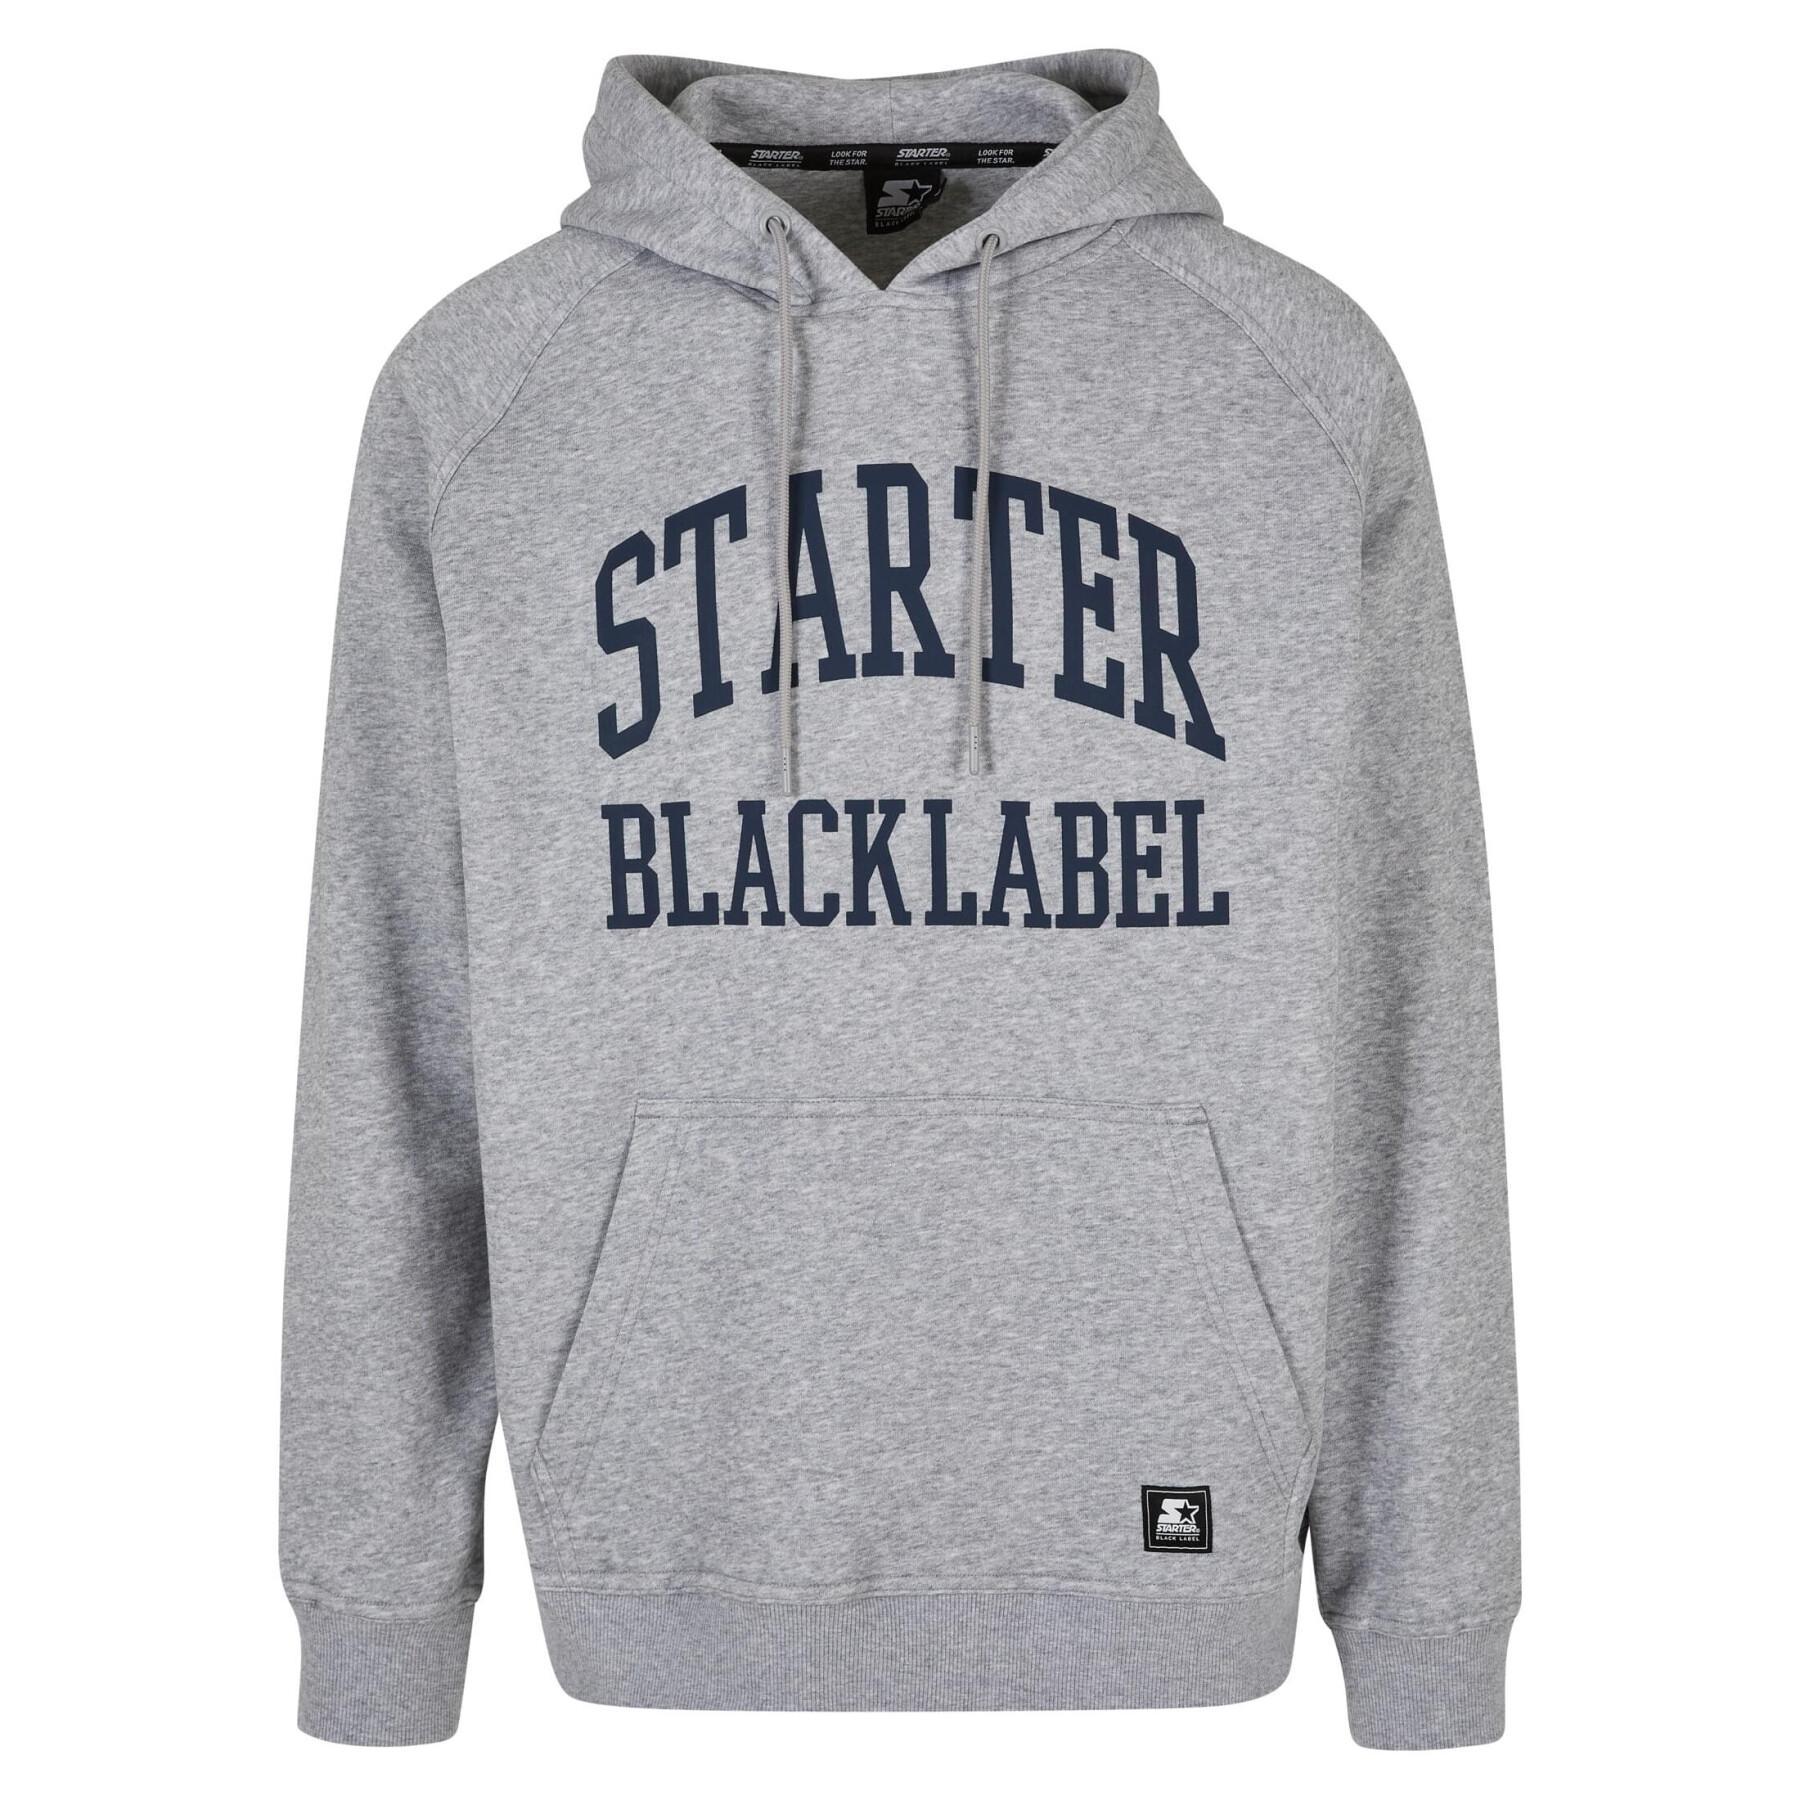 Sudadera con capucha Starter Starter Black Label